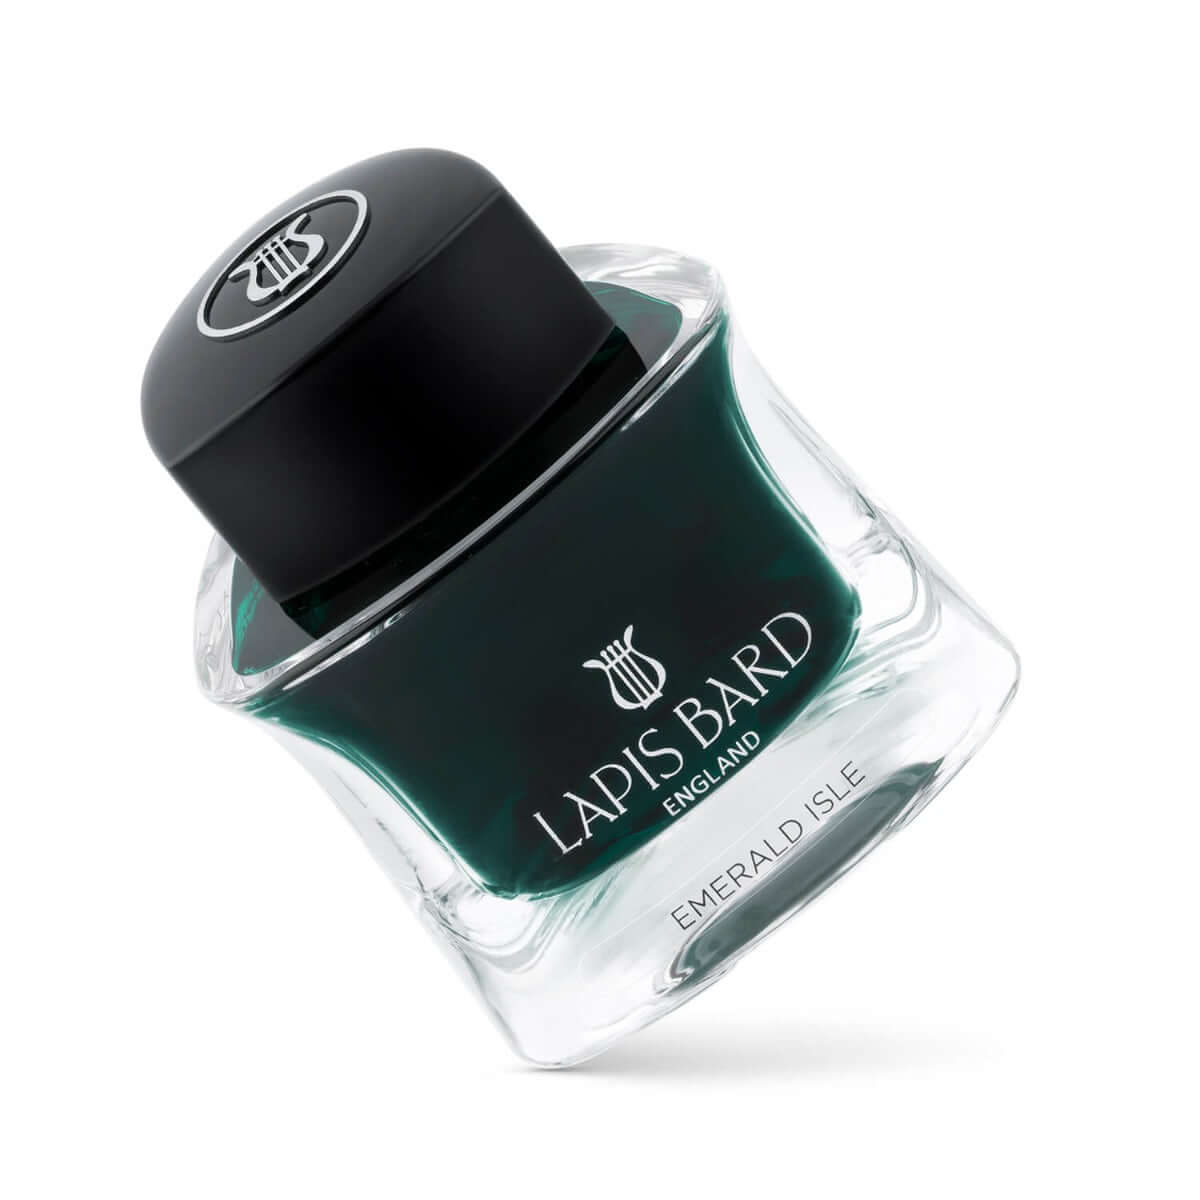 Lapis Bard Ink Bottle Emerald Isle (Teal Green) - 50ml 4